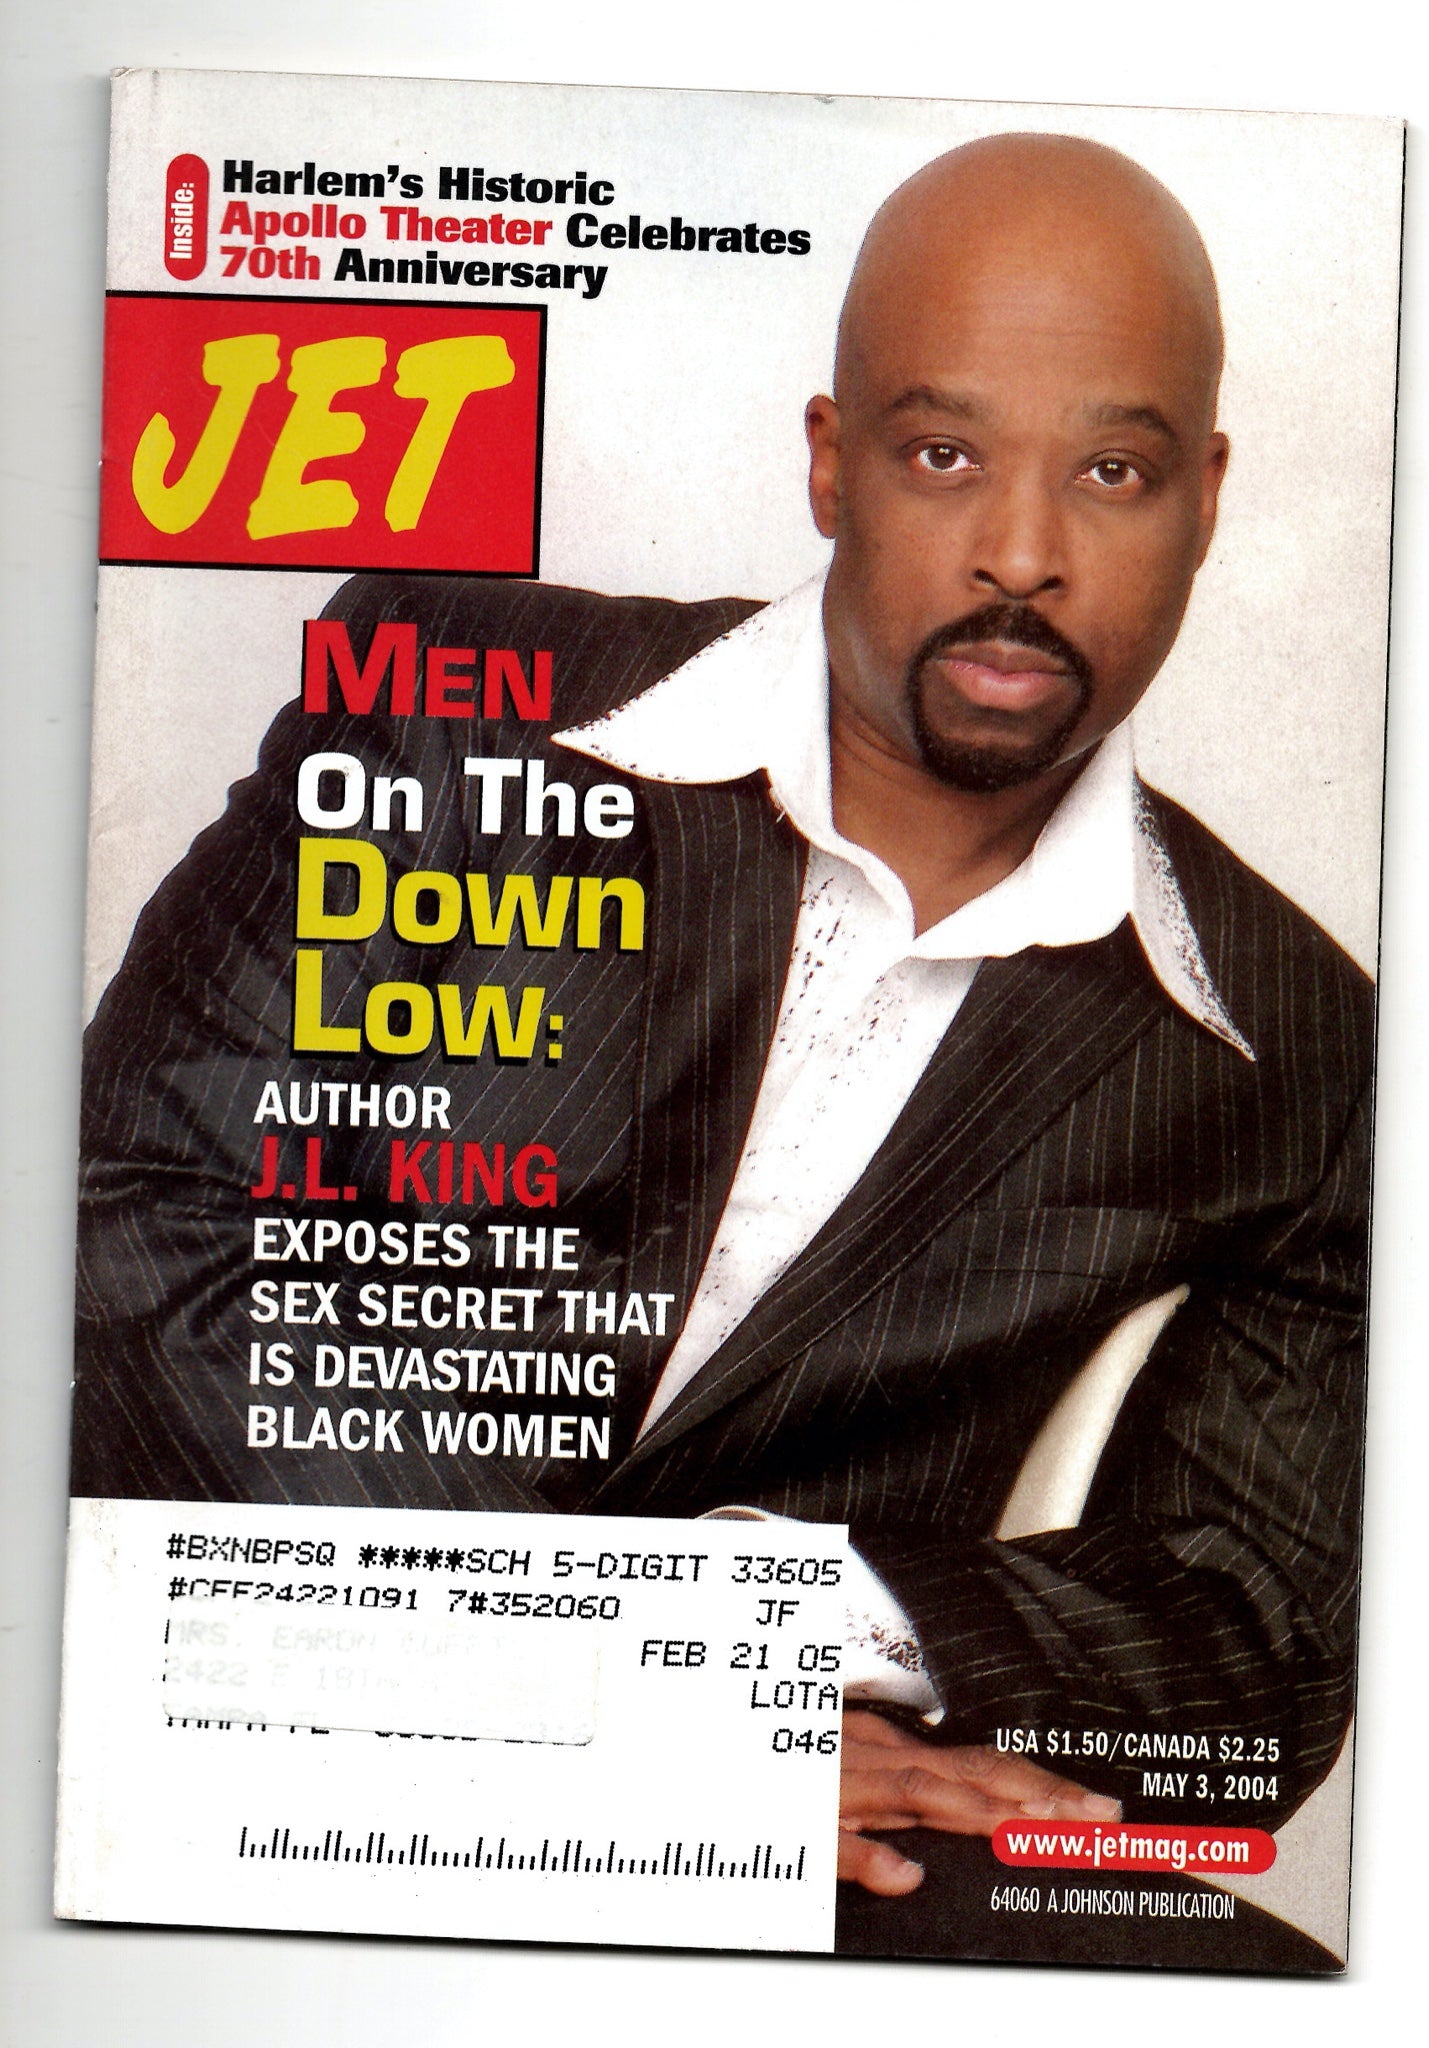 05 03 2004 JET Magazine J.L. King Men on the Down Low